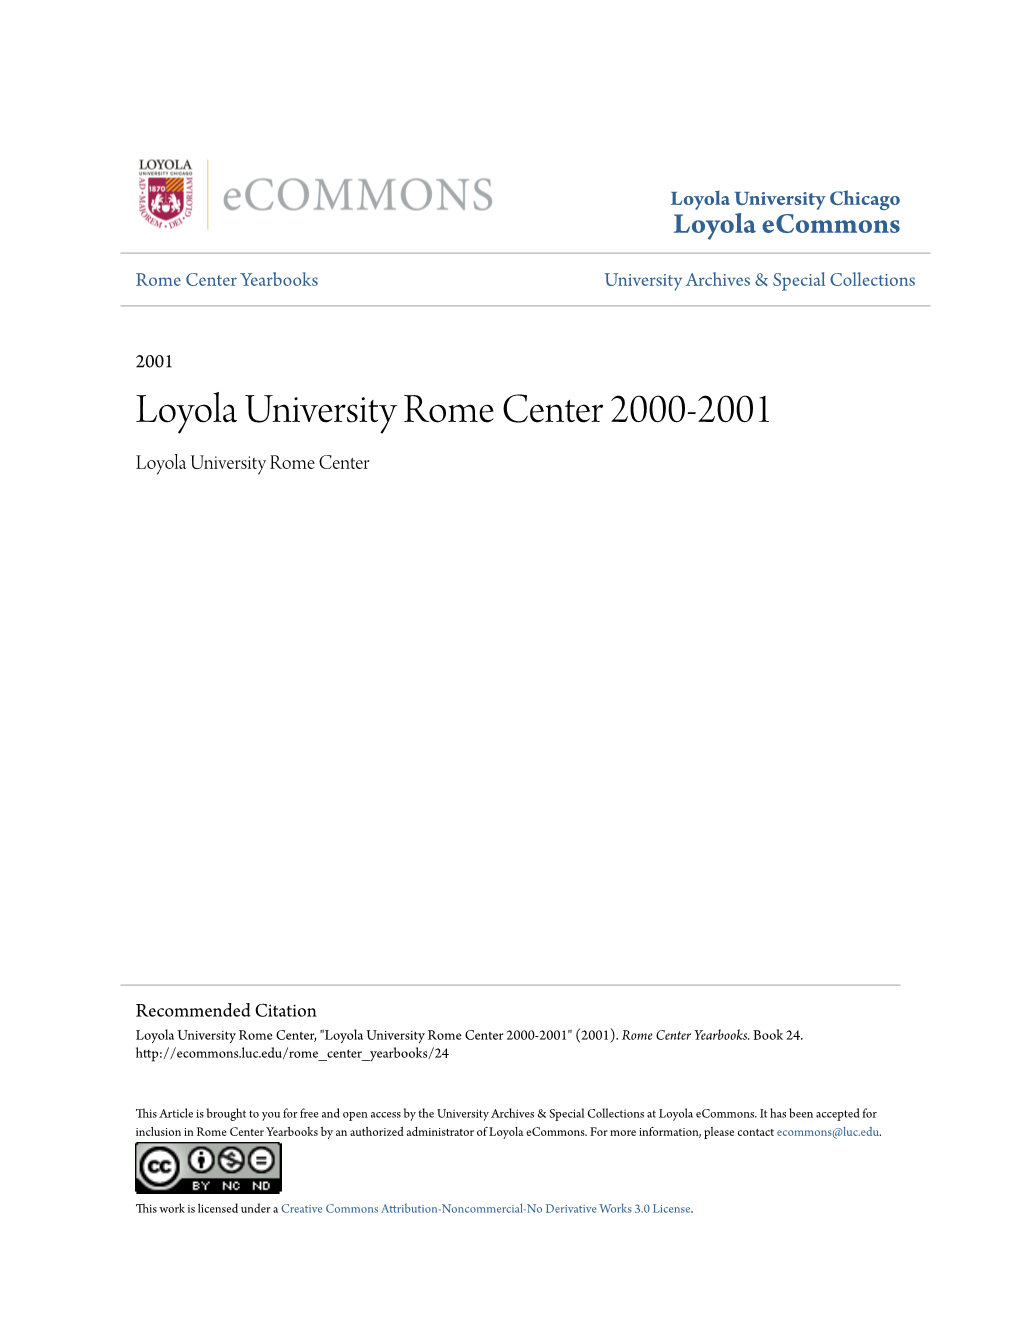 Loyola University Rome Center 2000-2001 Loyola University Rome Center